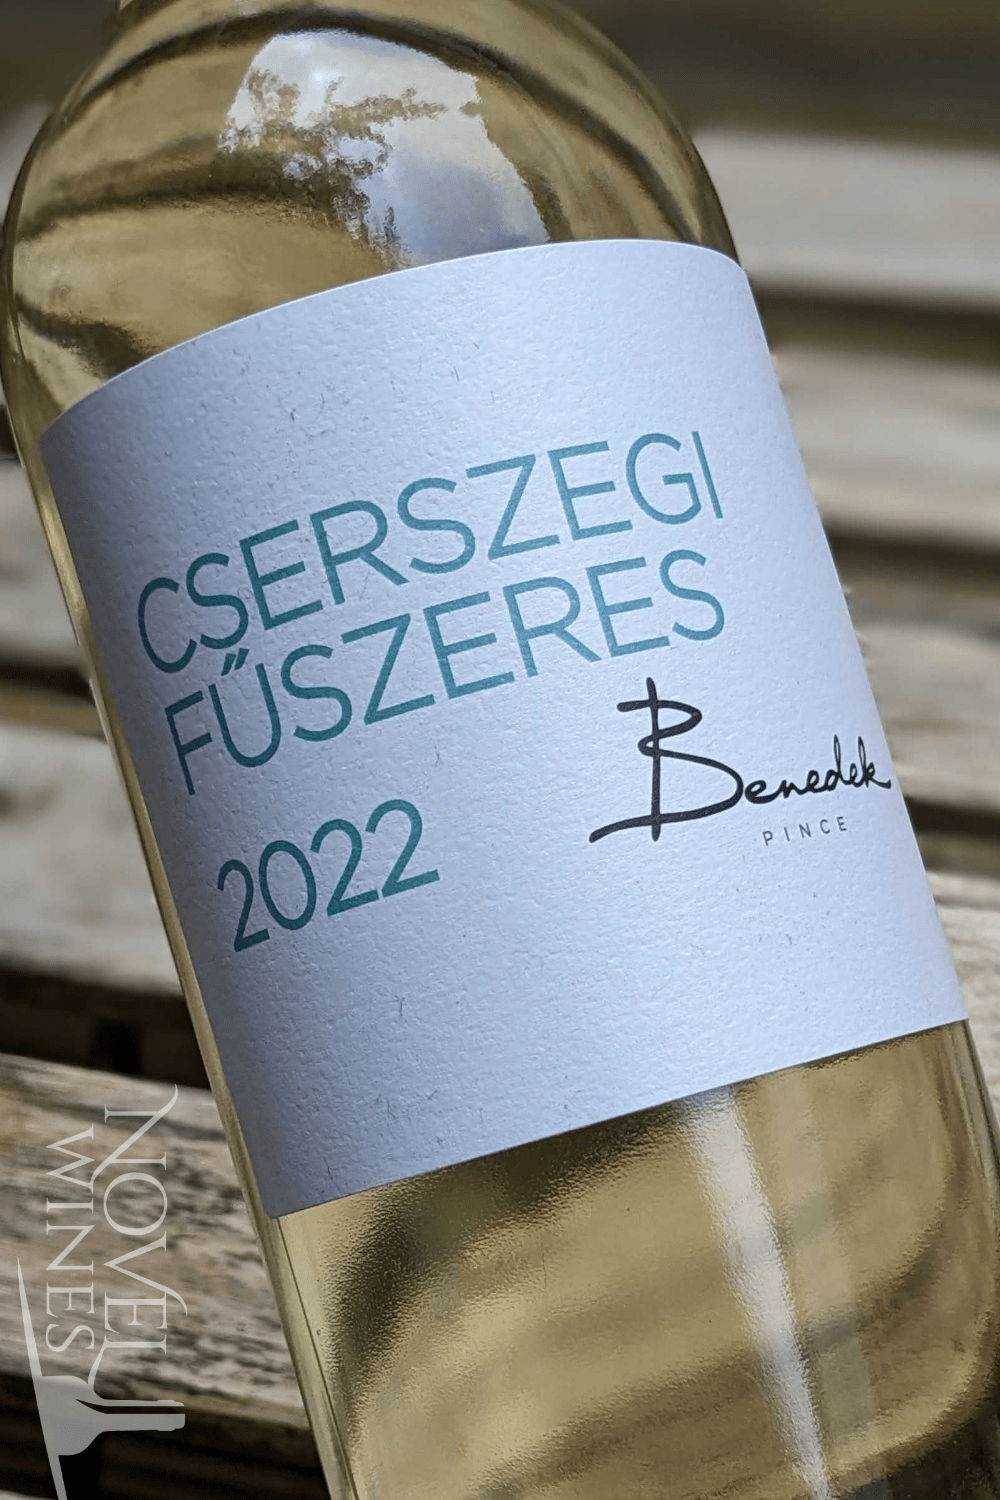 Benedek White Wine Benedek Cserszegi Fuszeres 2022, Hungary